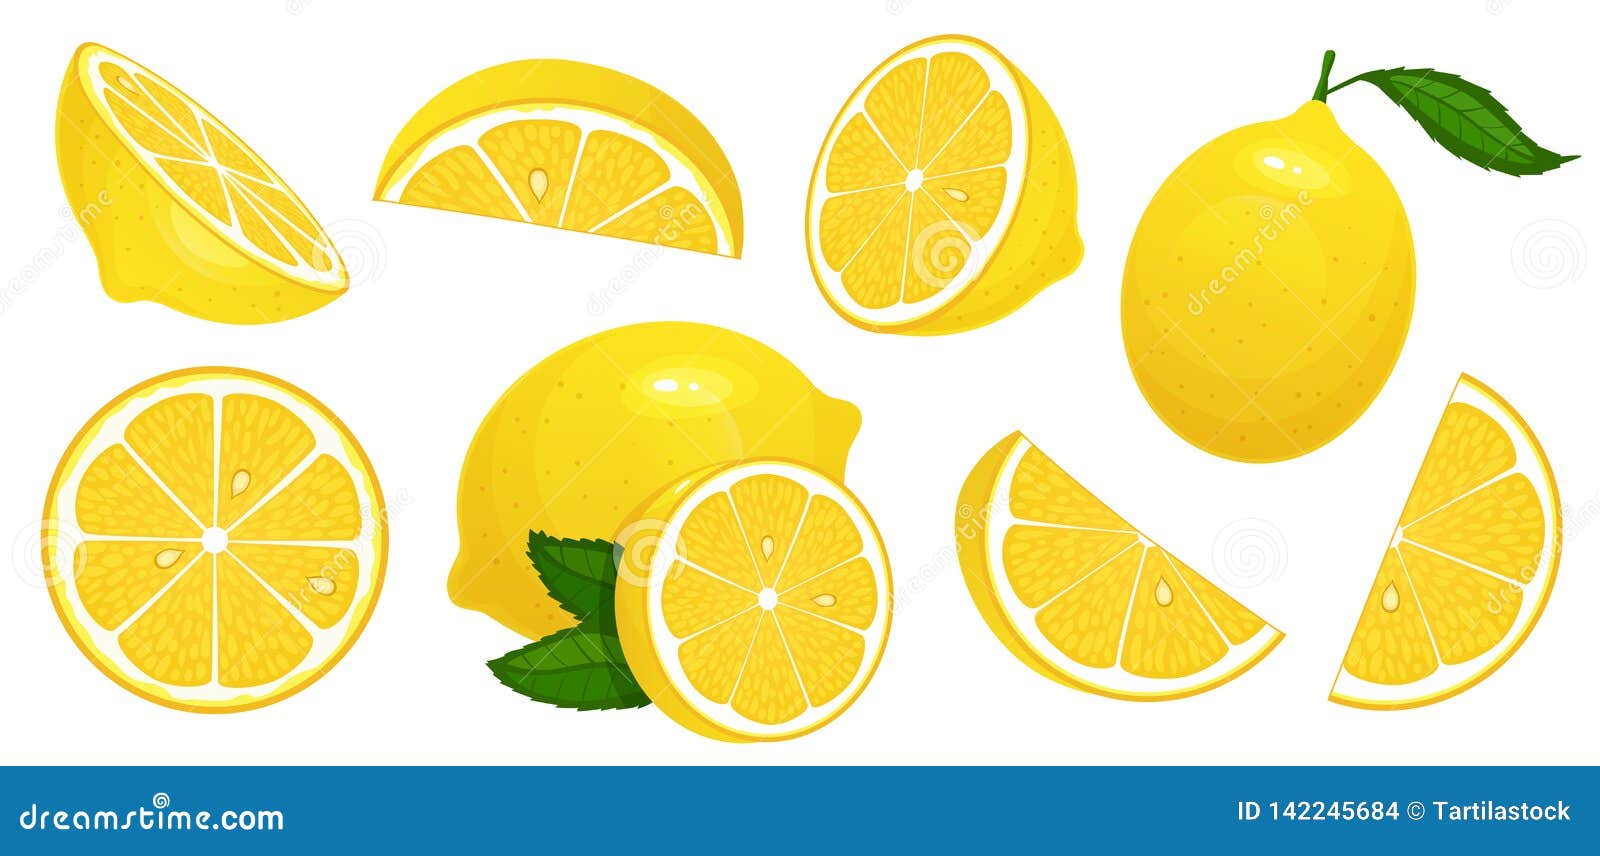 lemon slices. fresh citrus, half sliced lemons and chopped lemon  cartoon   set